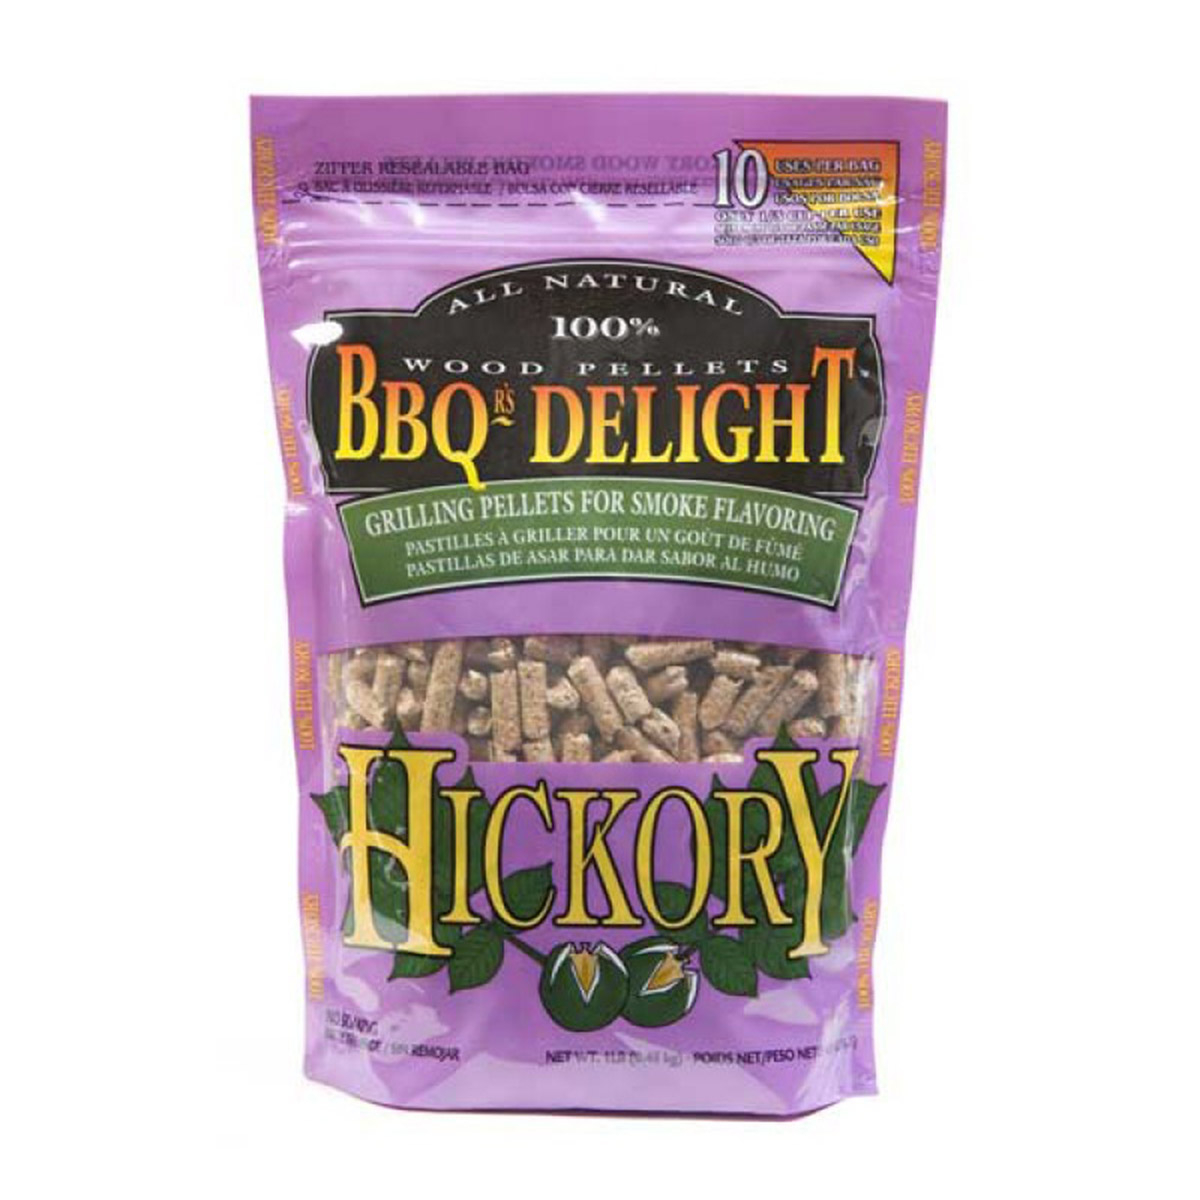 Hickory Smoking Pellets, 450g - BBQ Delight®